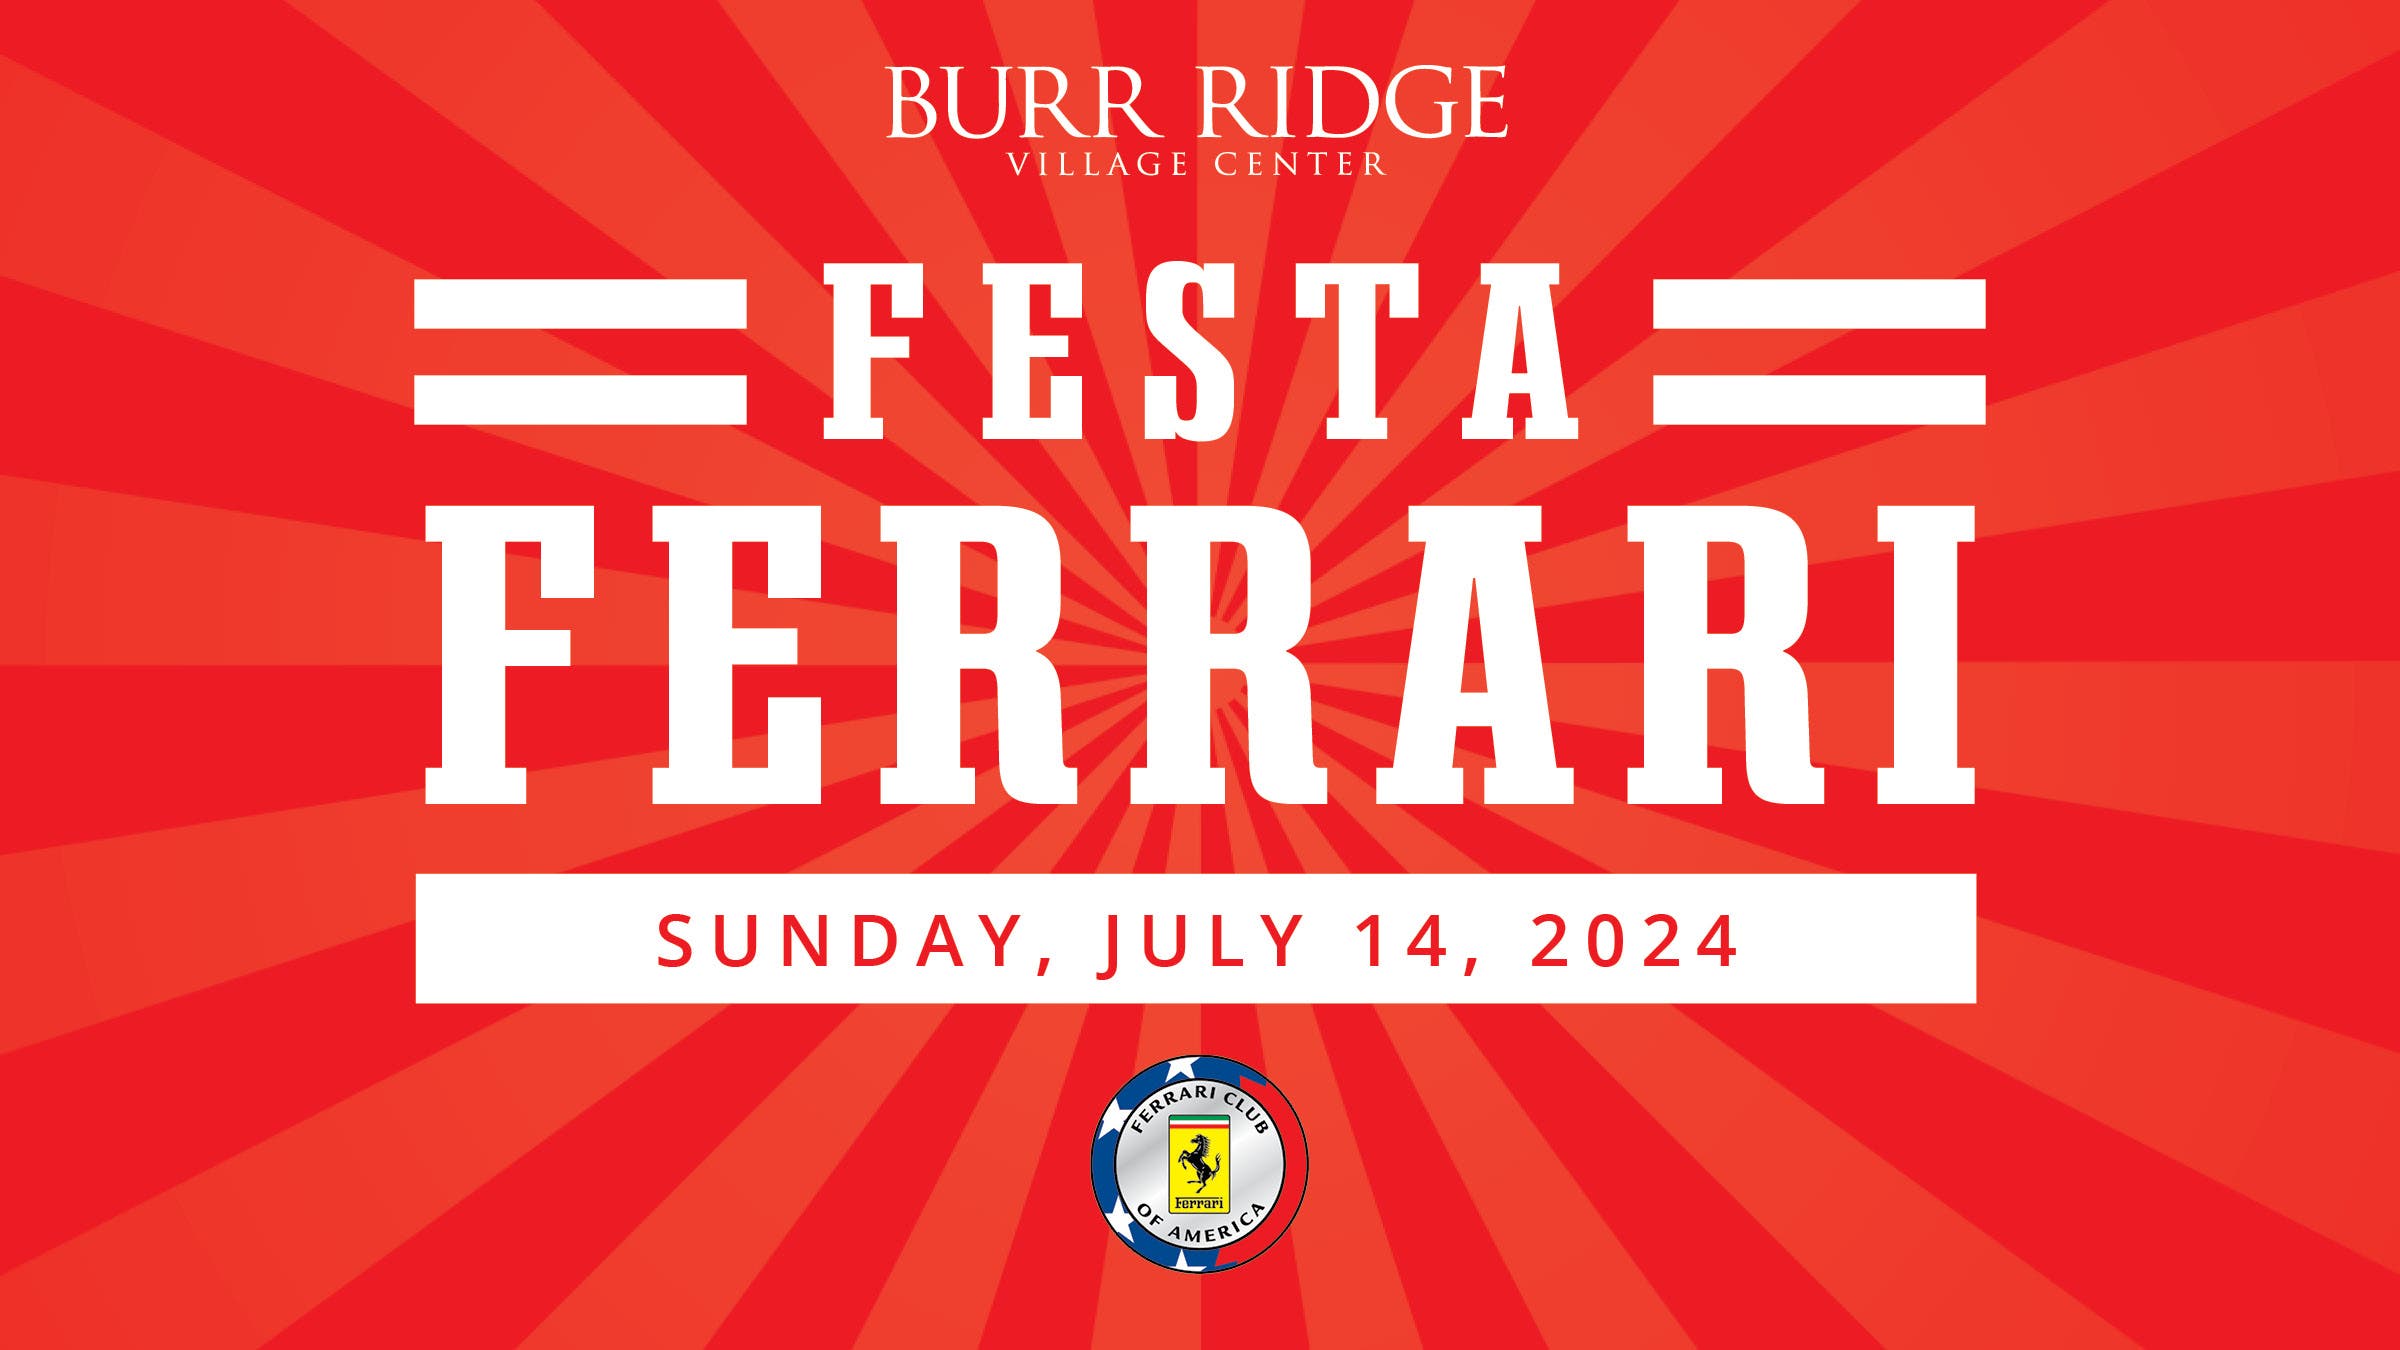 3rd Annual Festa Ferrari, Burr Ridge